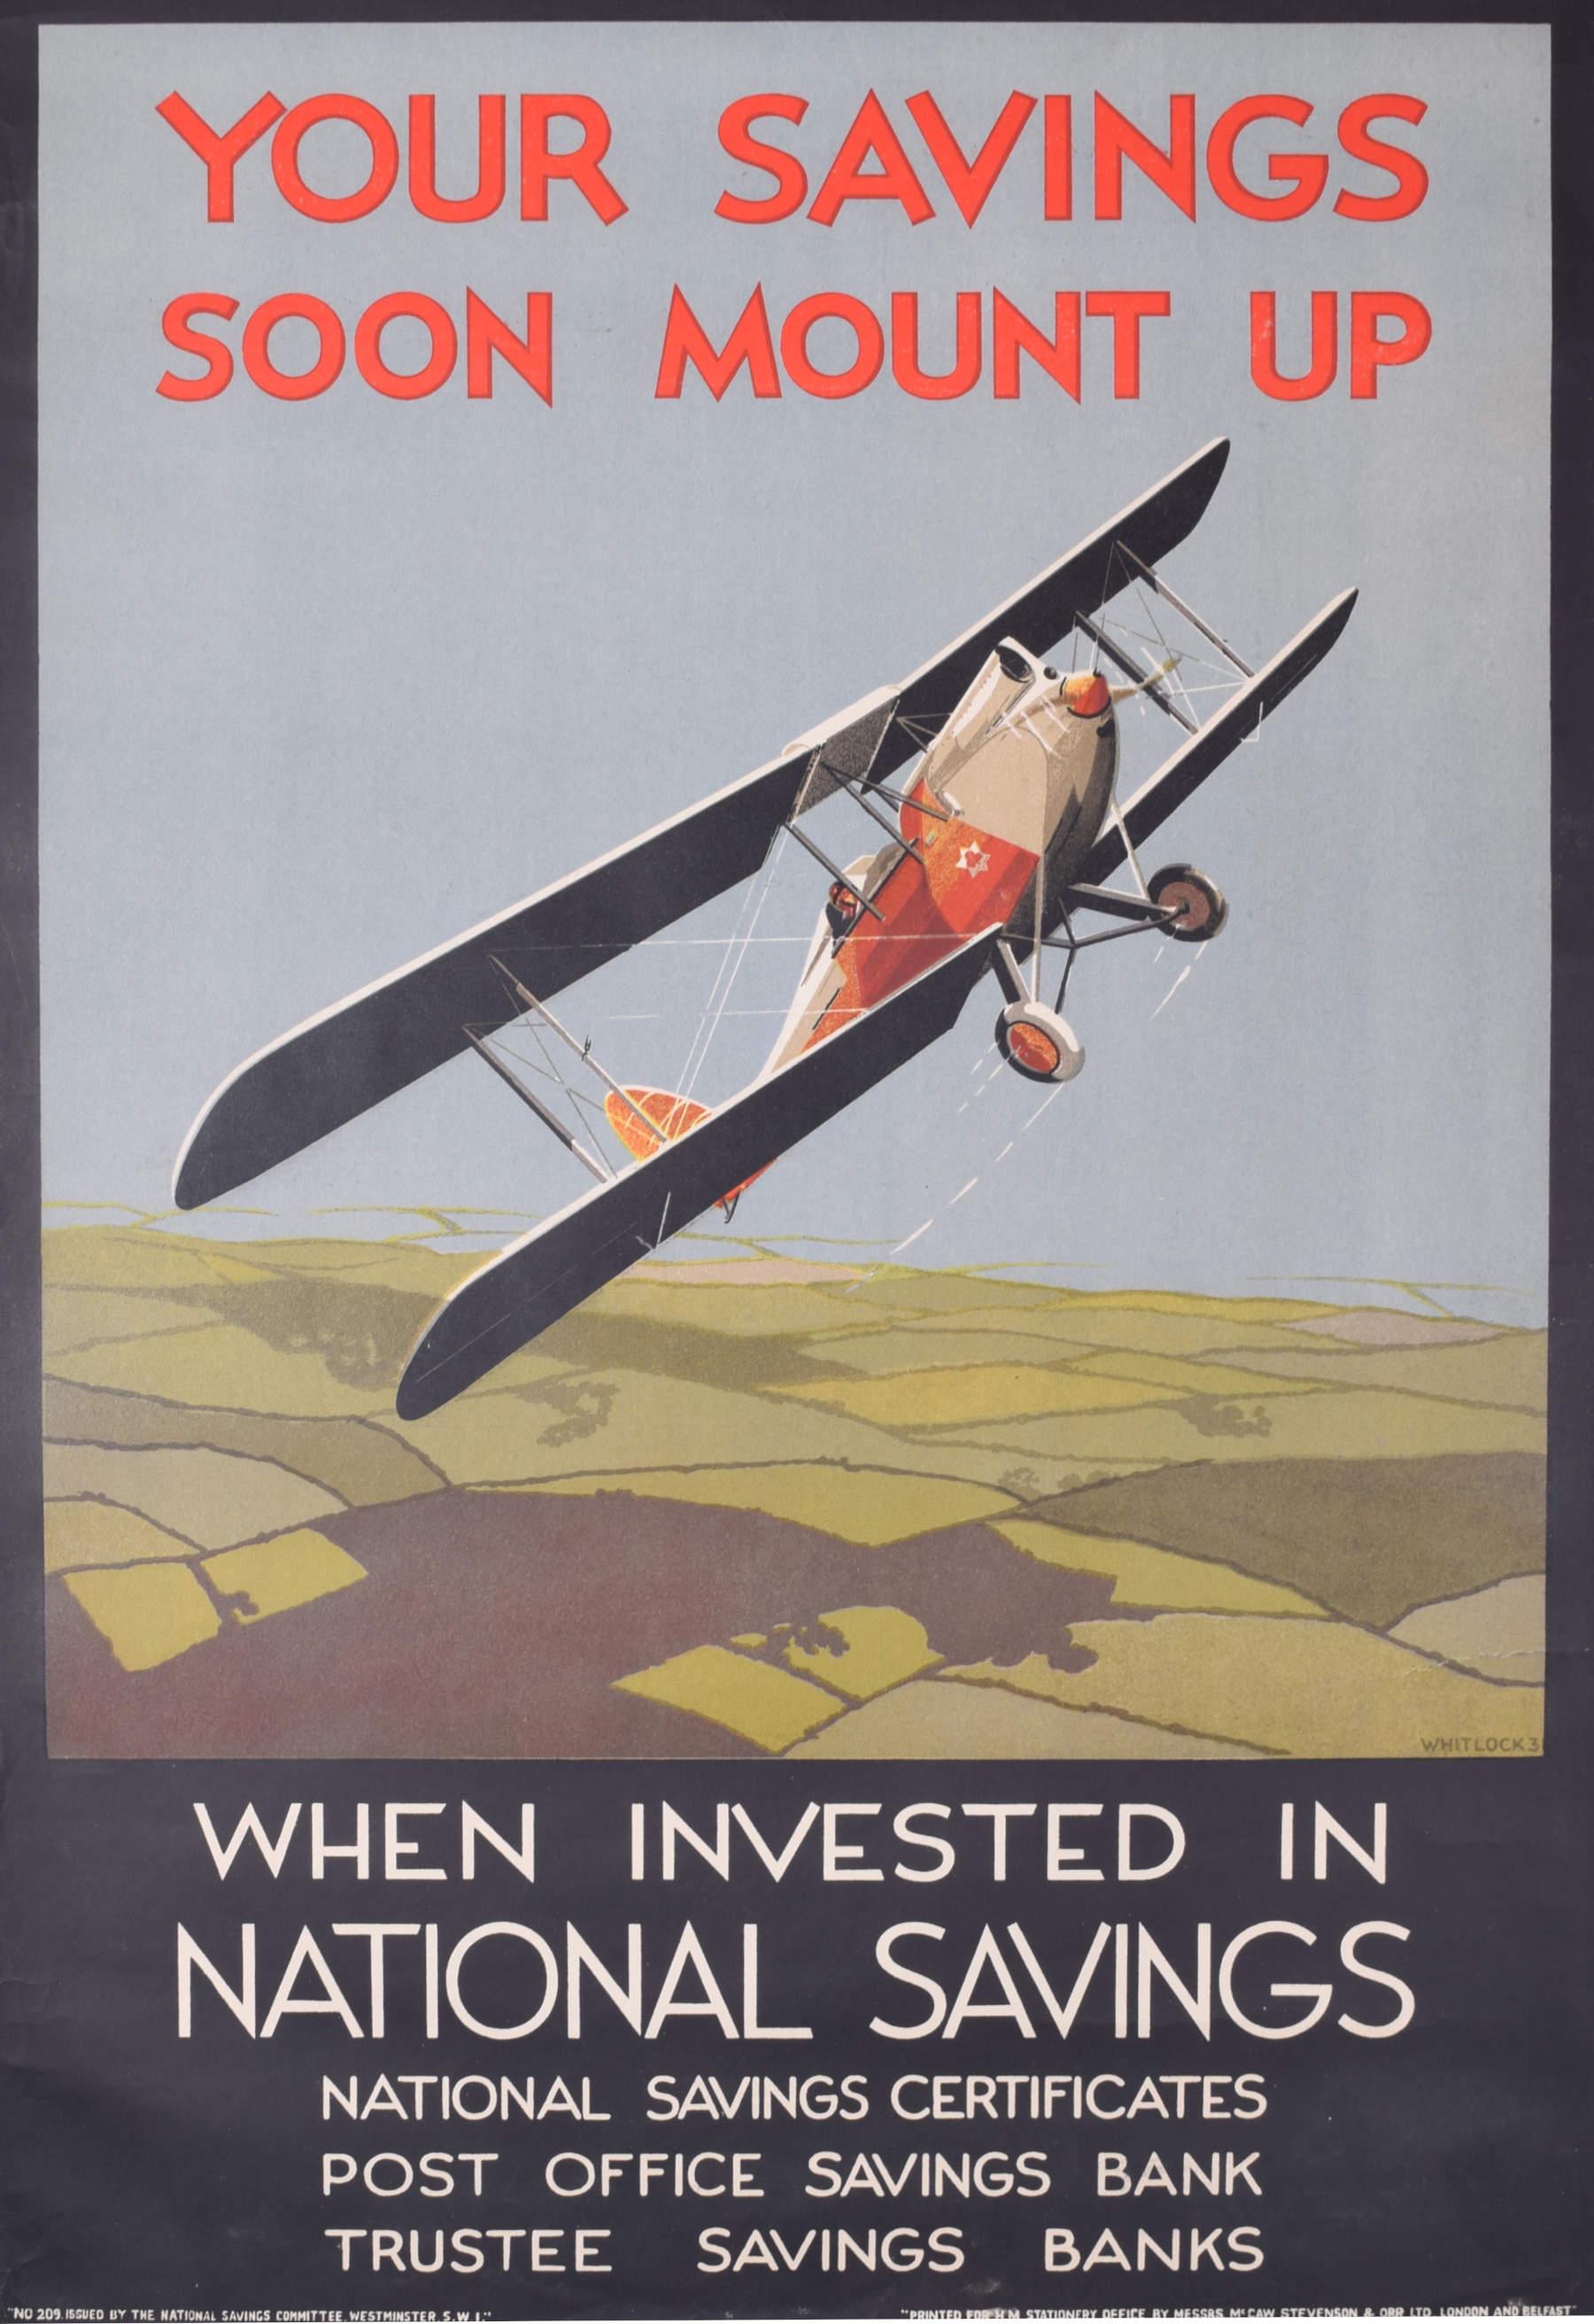 Unknown Landscape Print - National Savings biplane original vintage 1930s poster